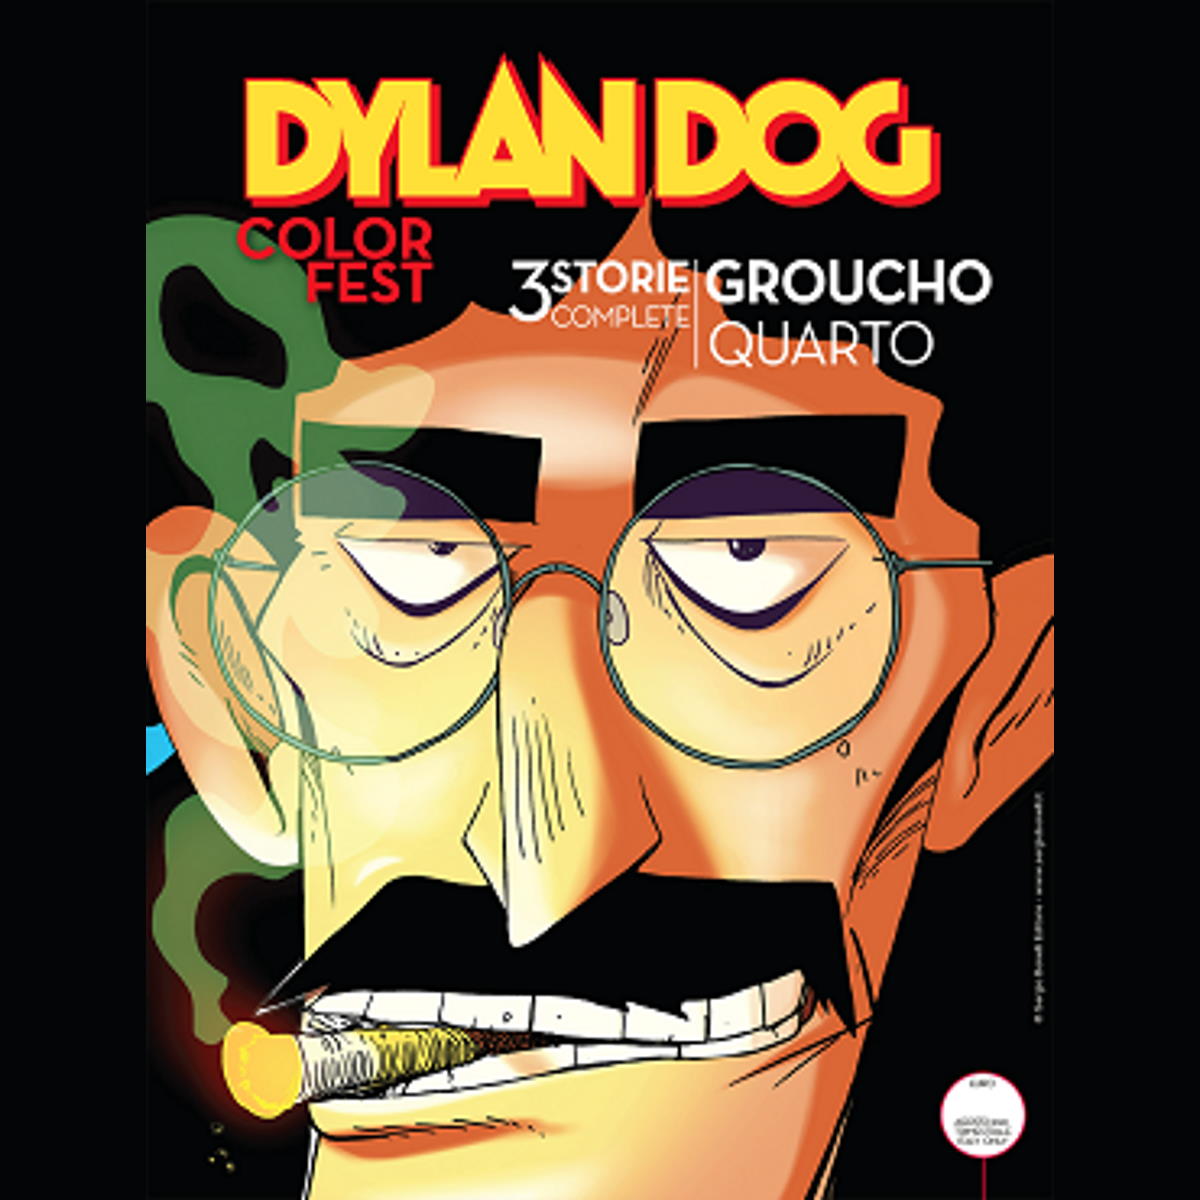 Dylan Dog Color Fest 42 GROUCHO QUARTO